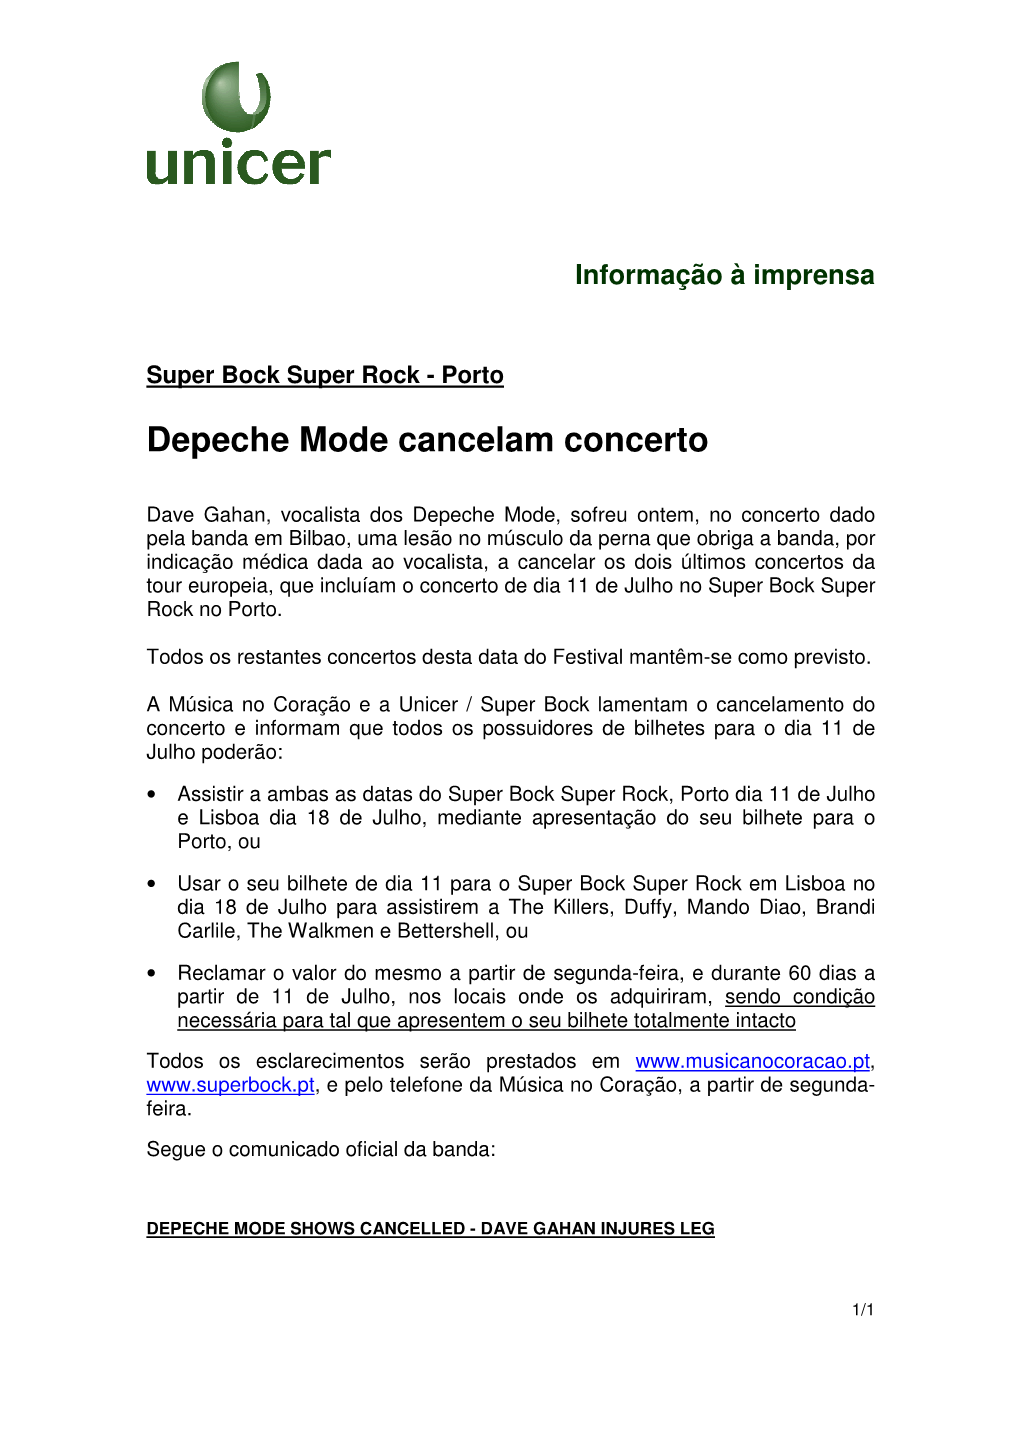 Depeche Mode Cancelam Concerto